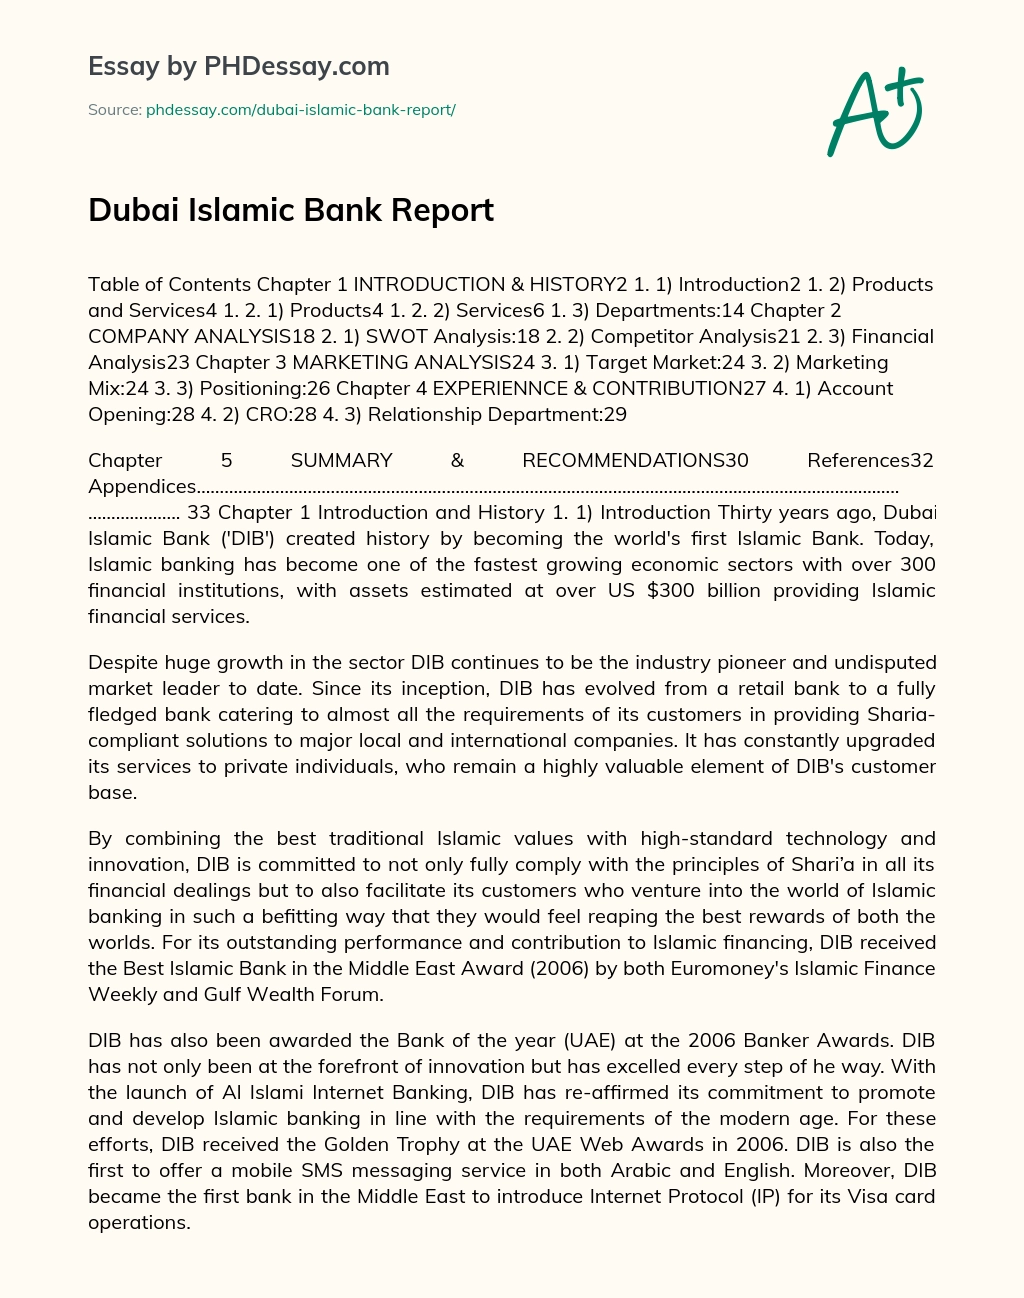 Dubai Islamic Bank Report essay